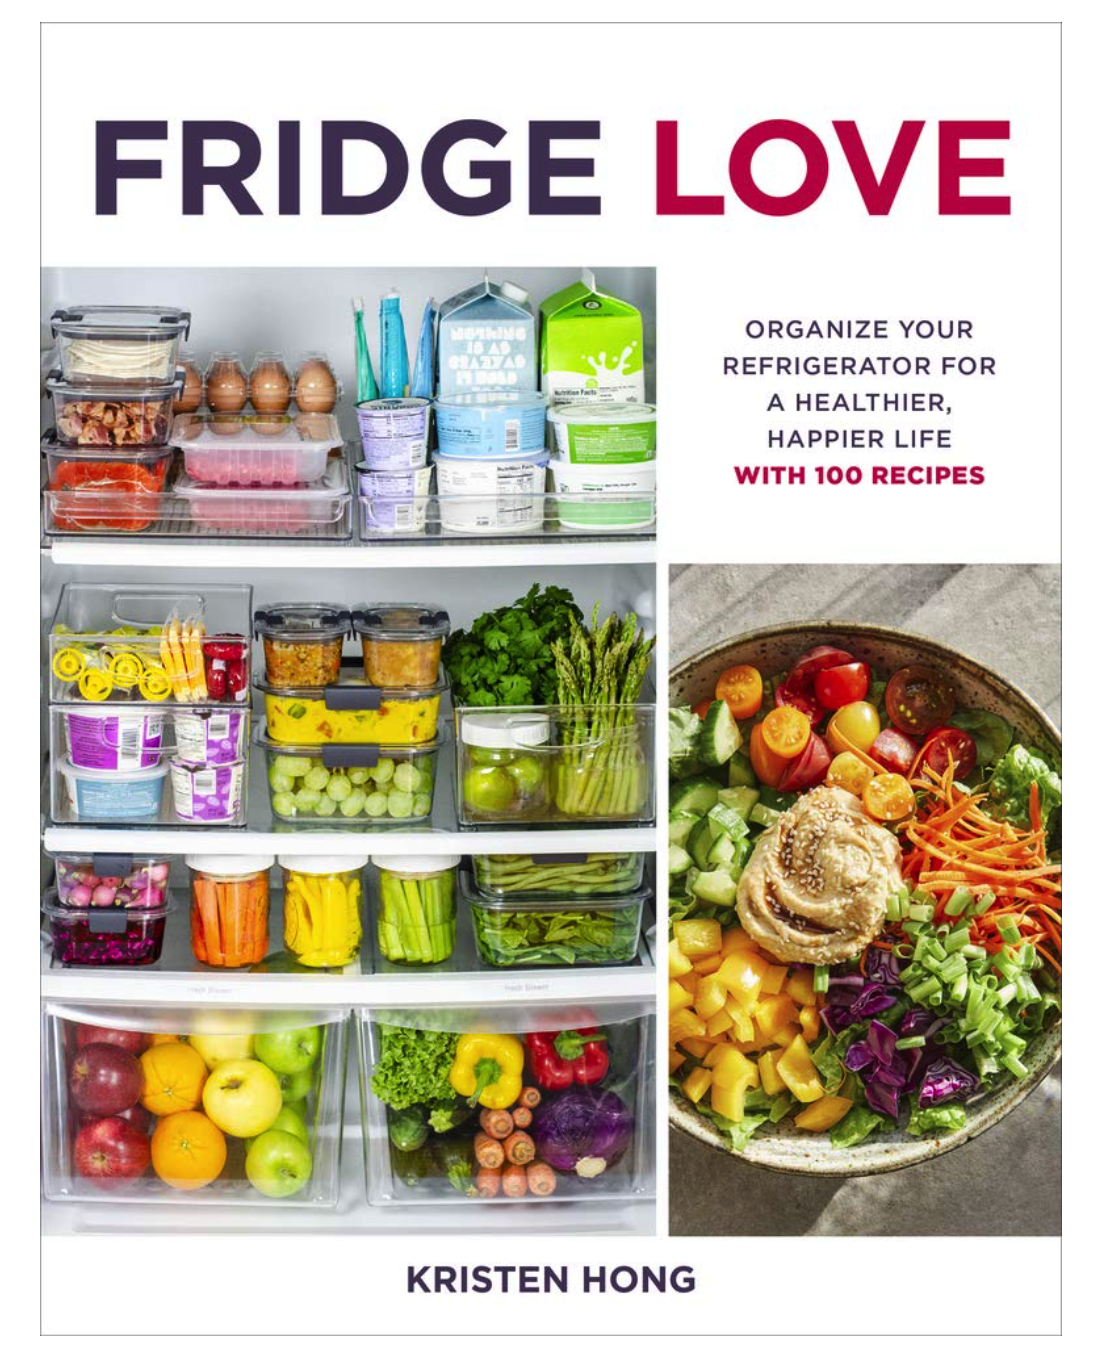 Fridge Love Cookbook Kristen Hong produce storage refrigerator organization guide 